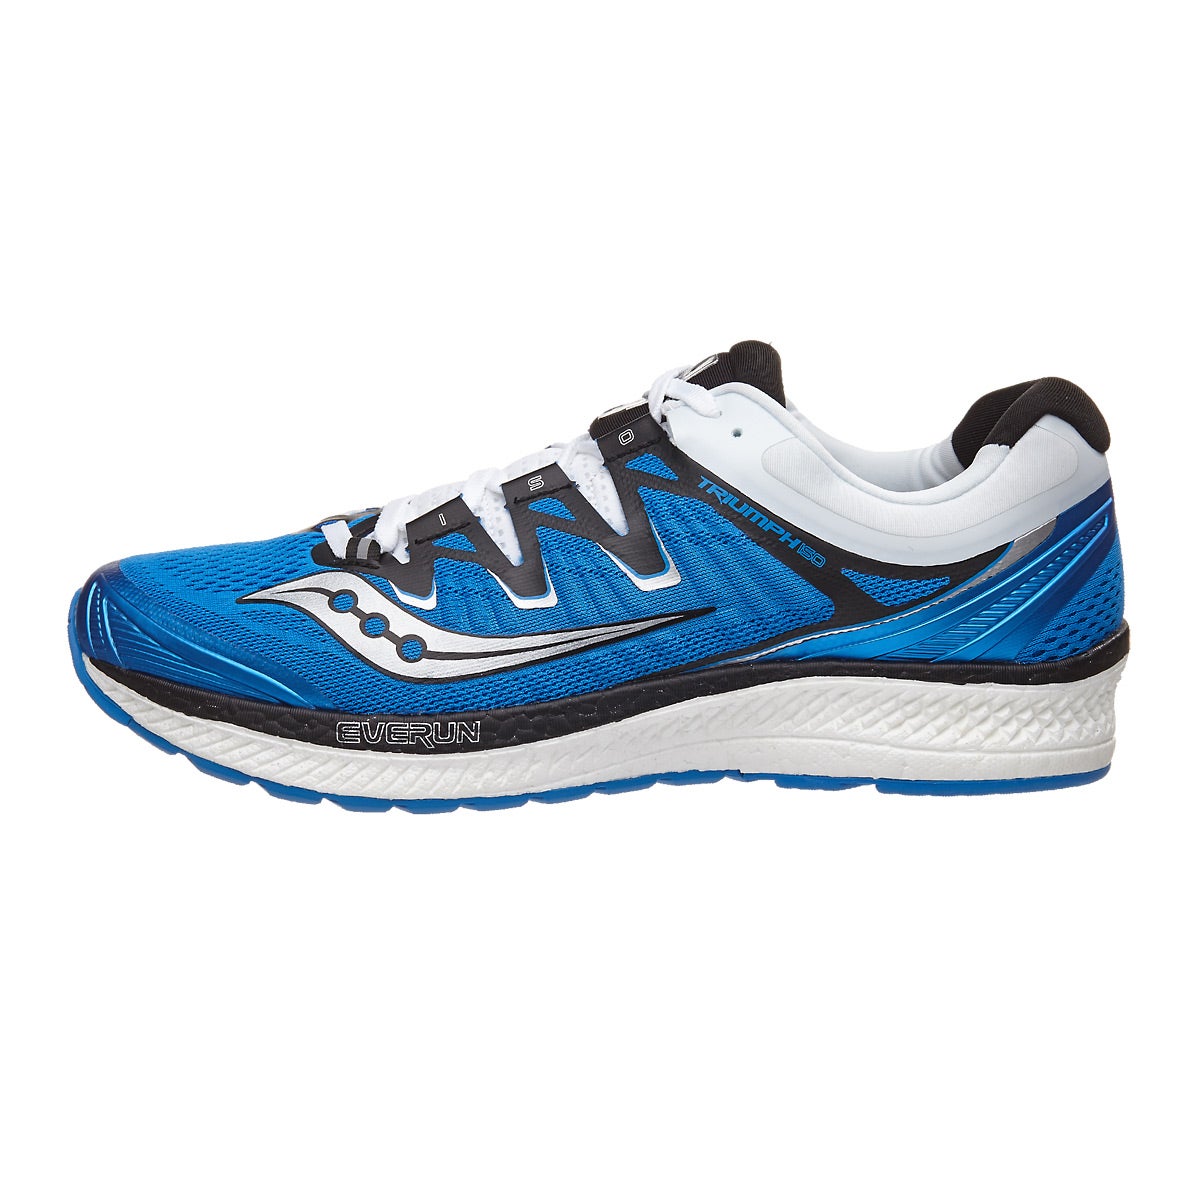 Saucony Triumph ISO 4 Men's Shoes Blue/Black/White 360° View | Running ...